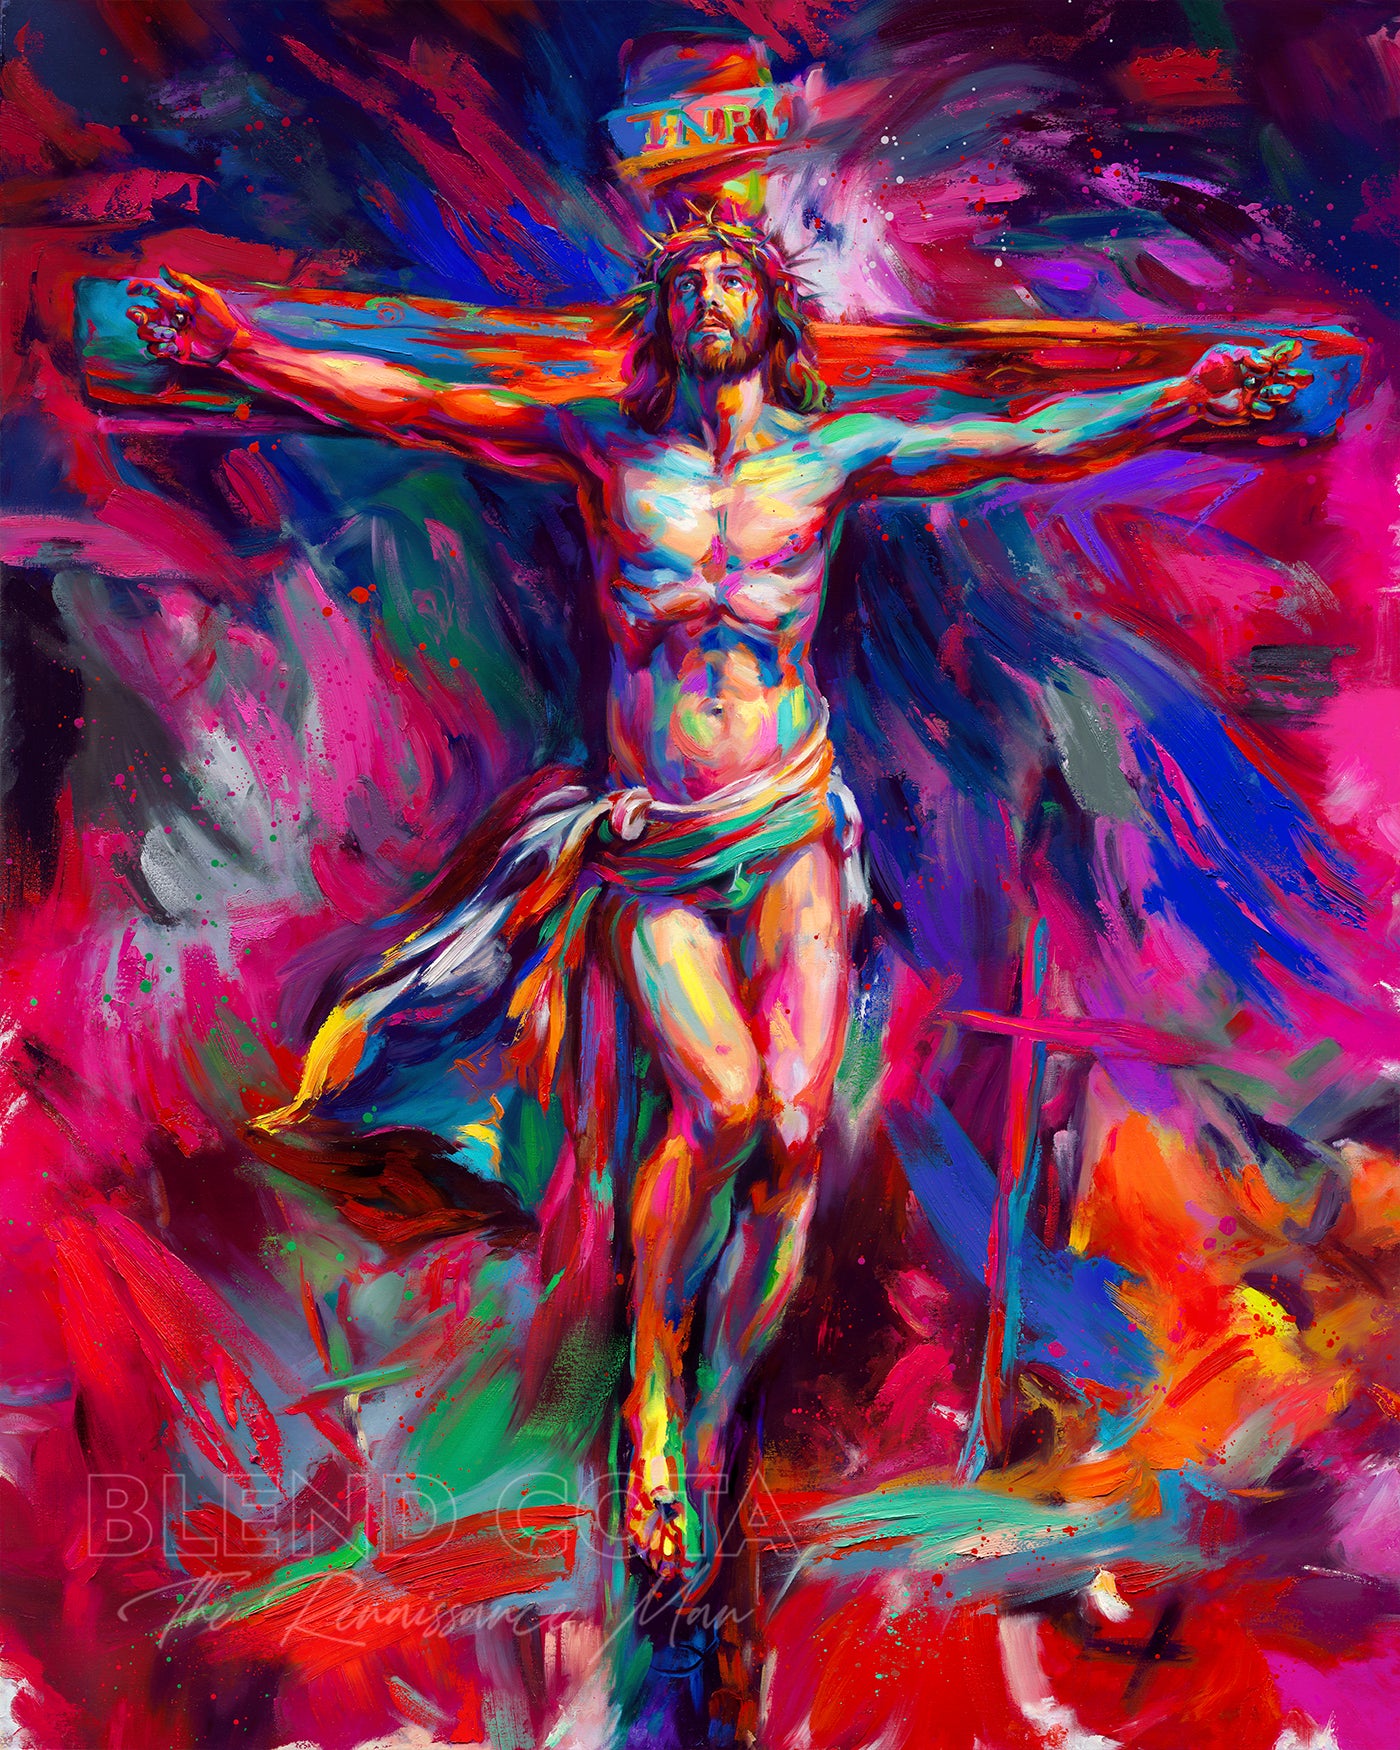 blend cota art of jesus christ crucifixion painting by blend cota studios 